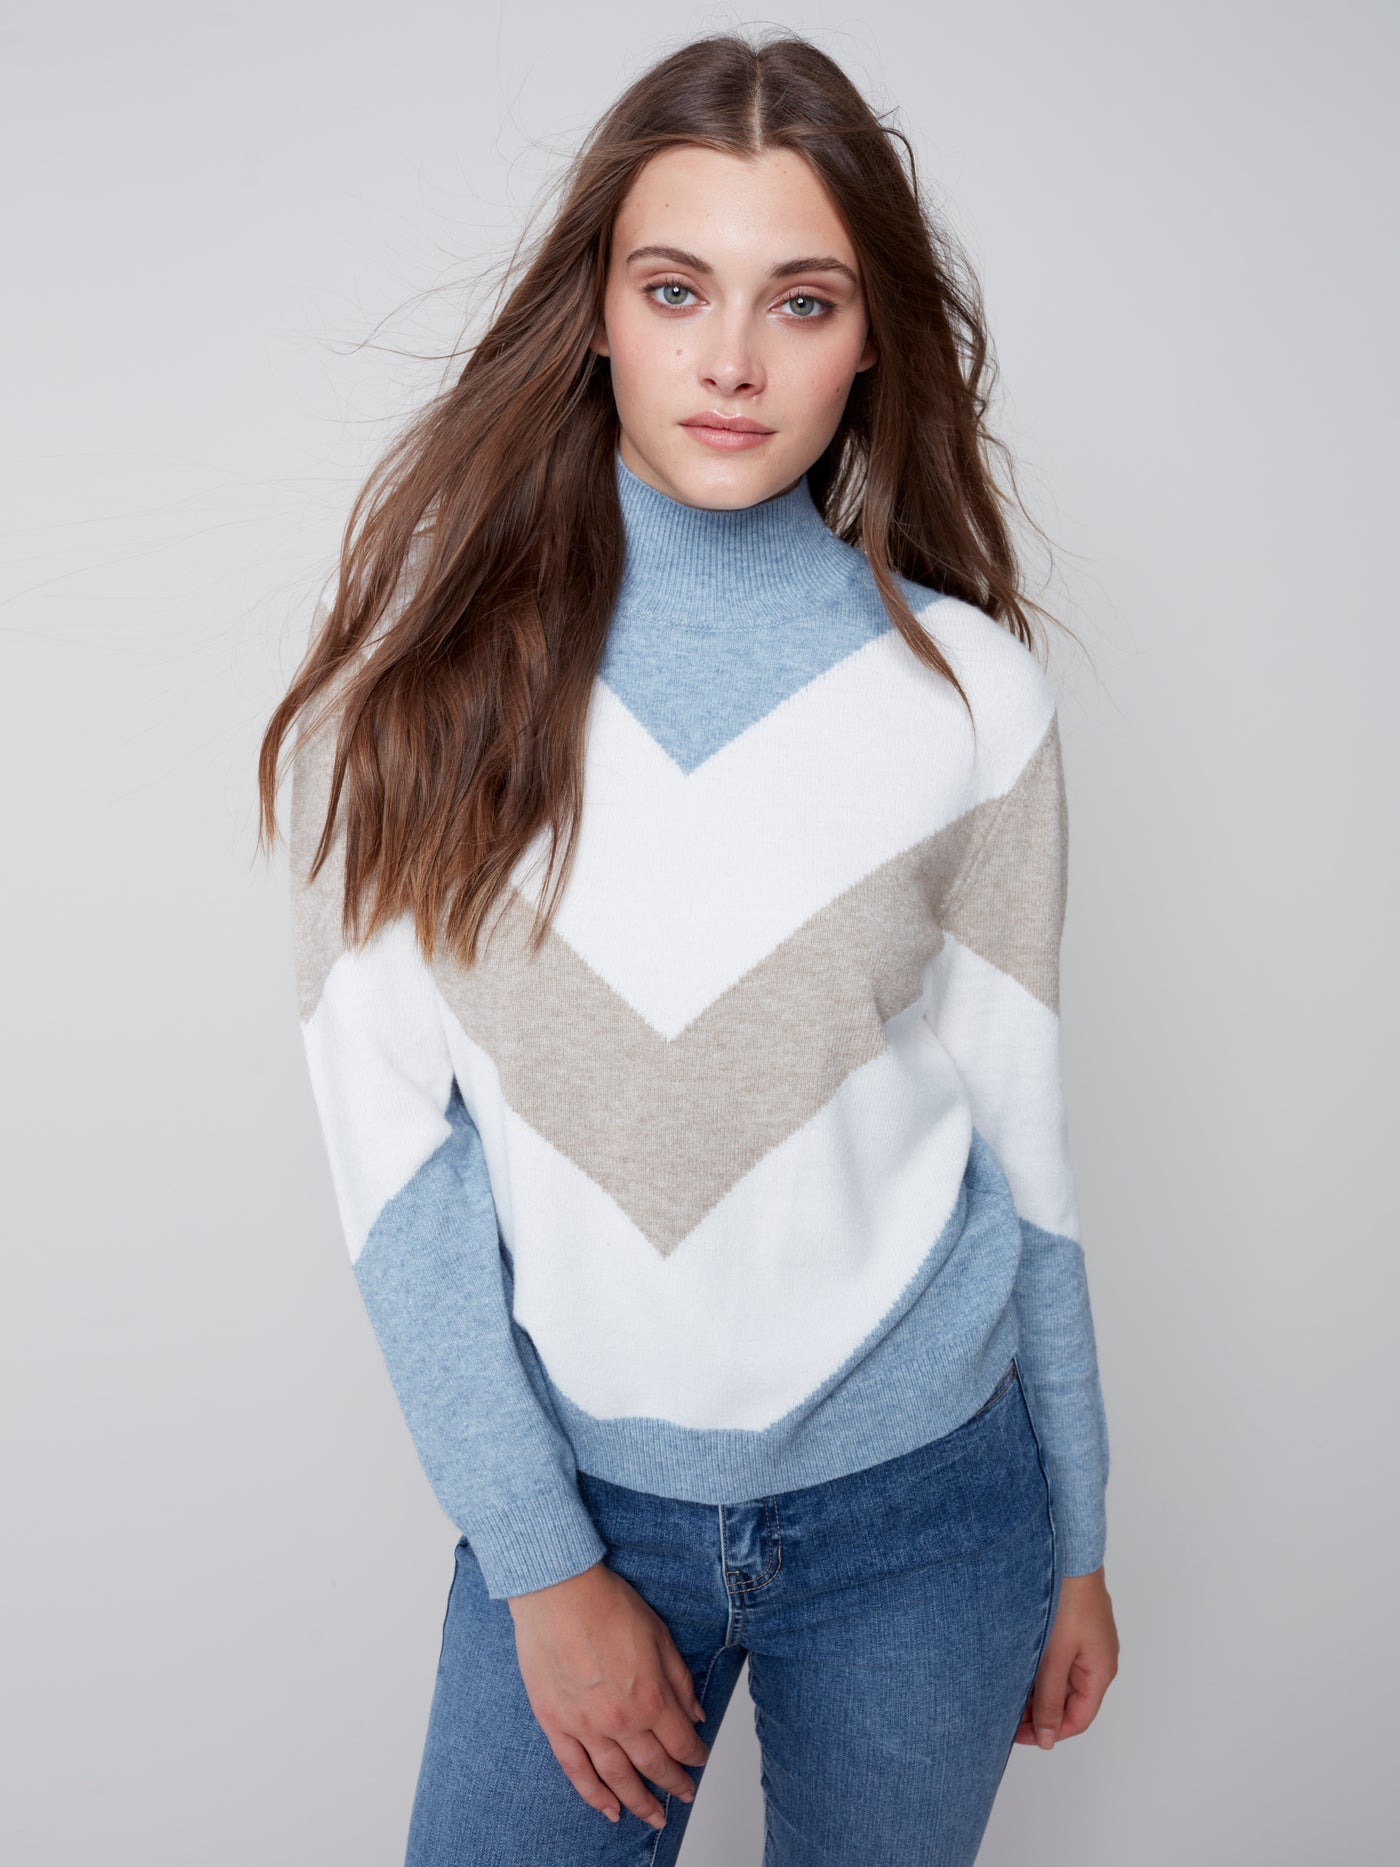 Charlie B Top - Chevron Sweater - White /Blue